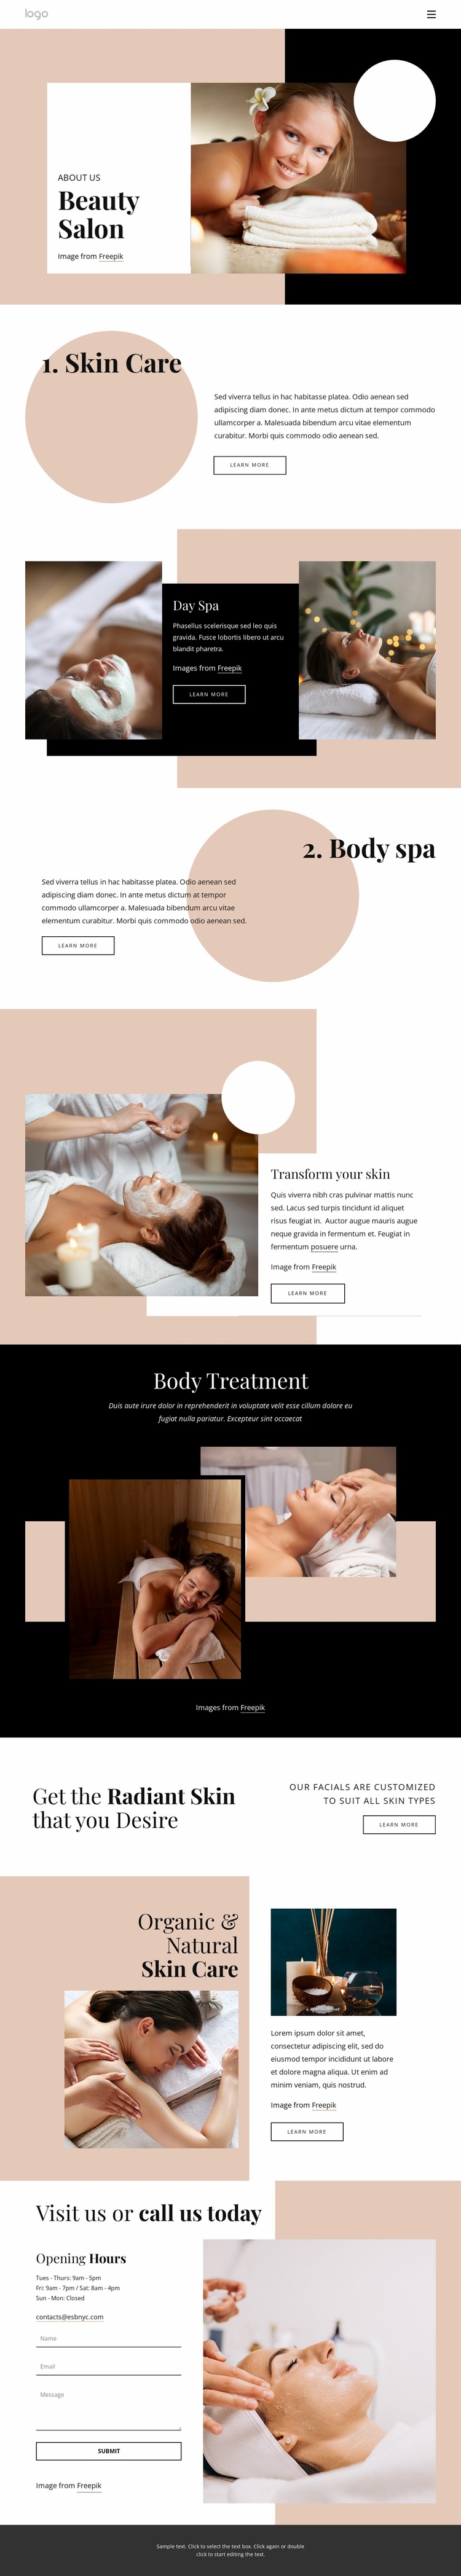 New wellness experiences Website Design